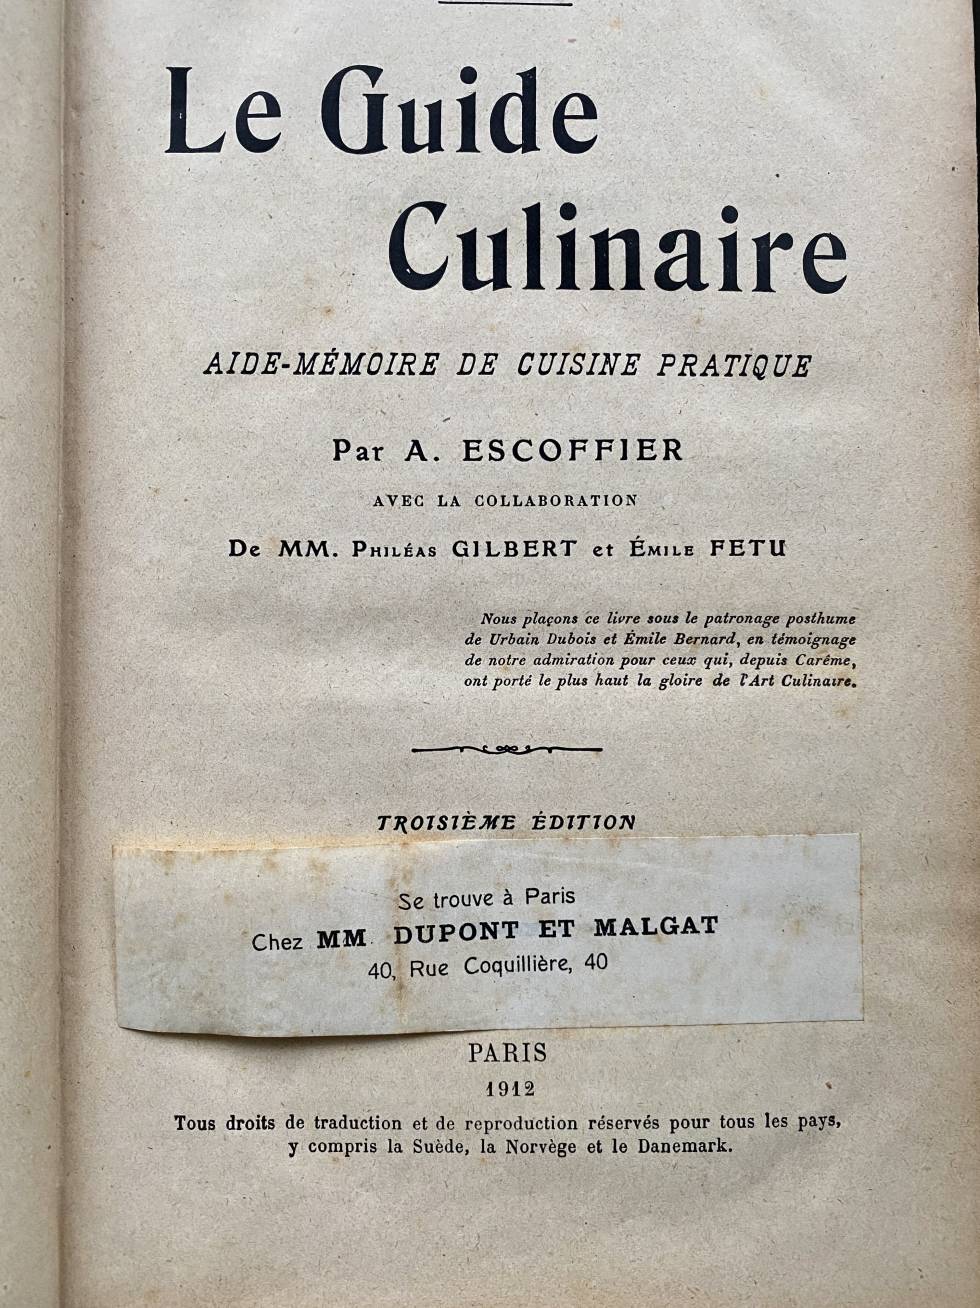 Le Guide Gulinaire de Escoffier, donde recoge la receta de la olla podrida. J.C. CAPEL